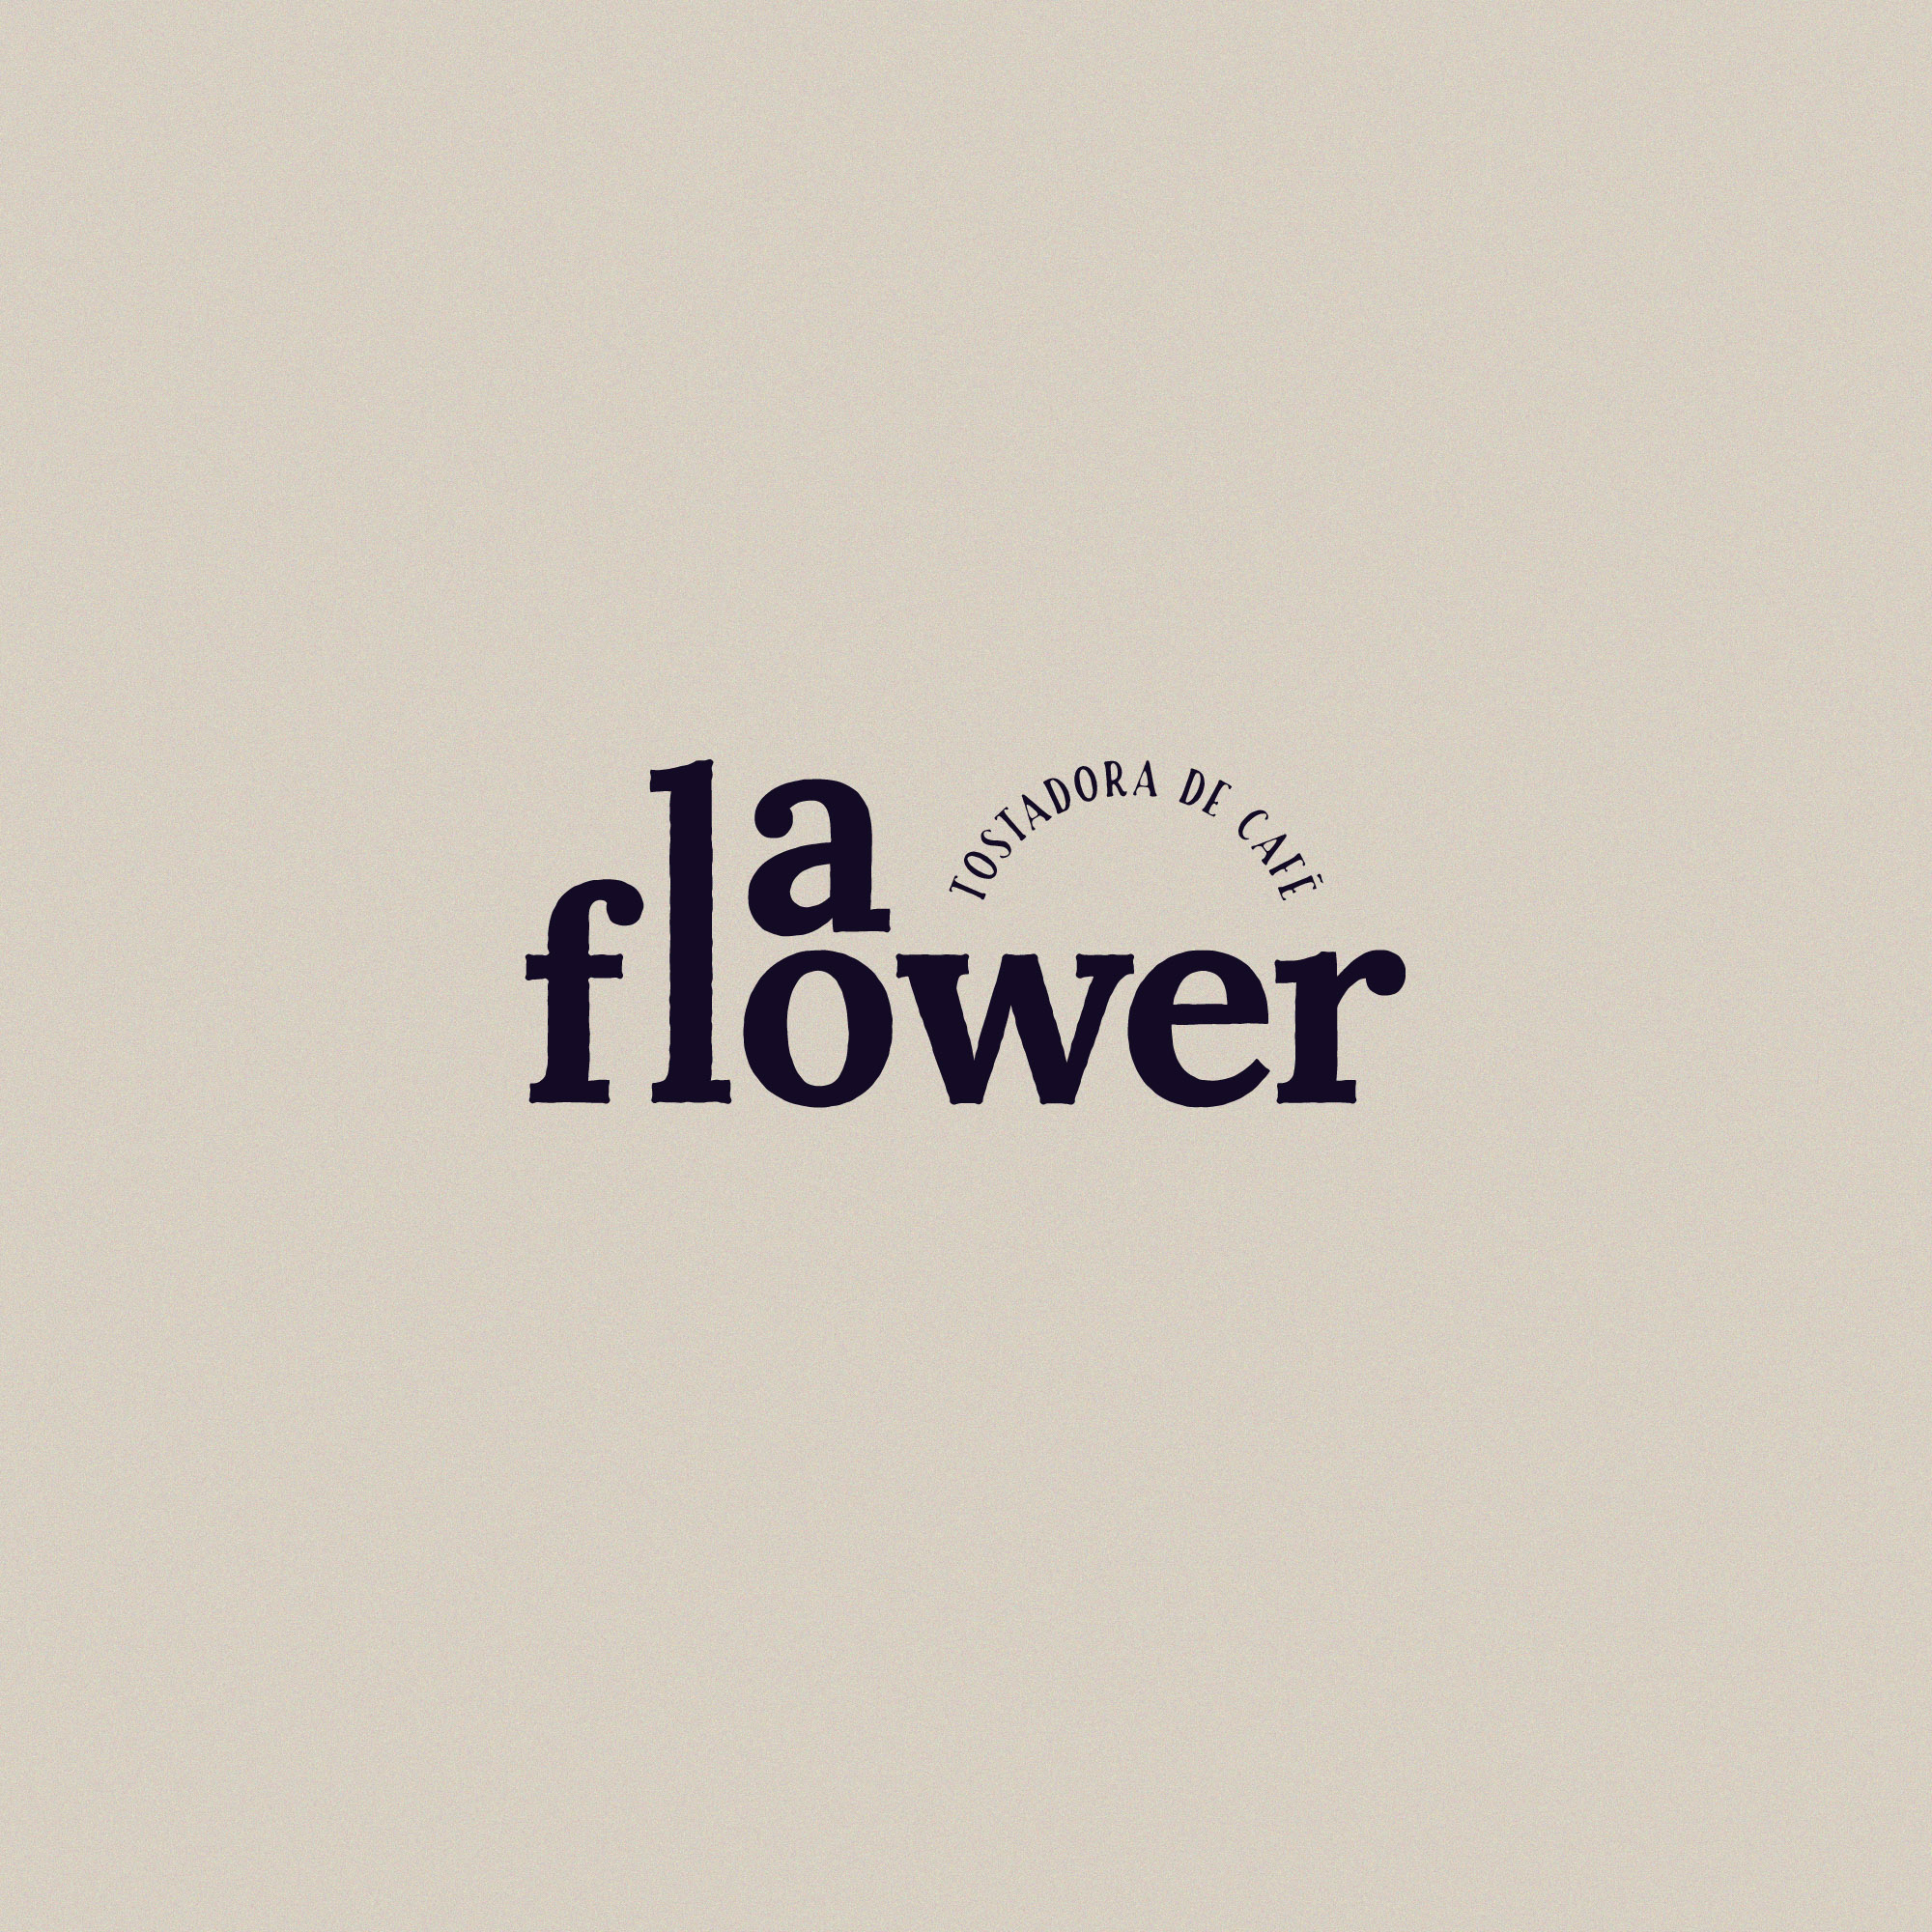 La Flower Brand Identity Design by Kev Pineda Design